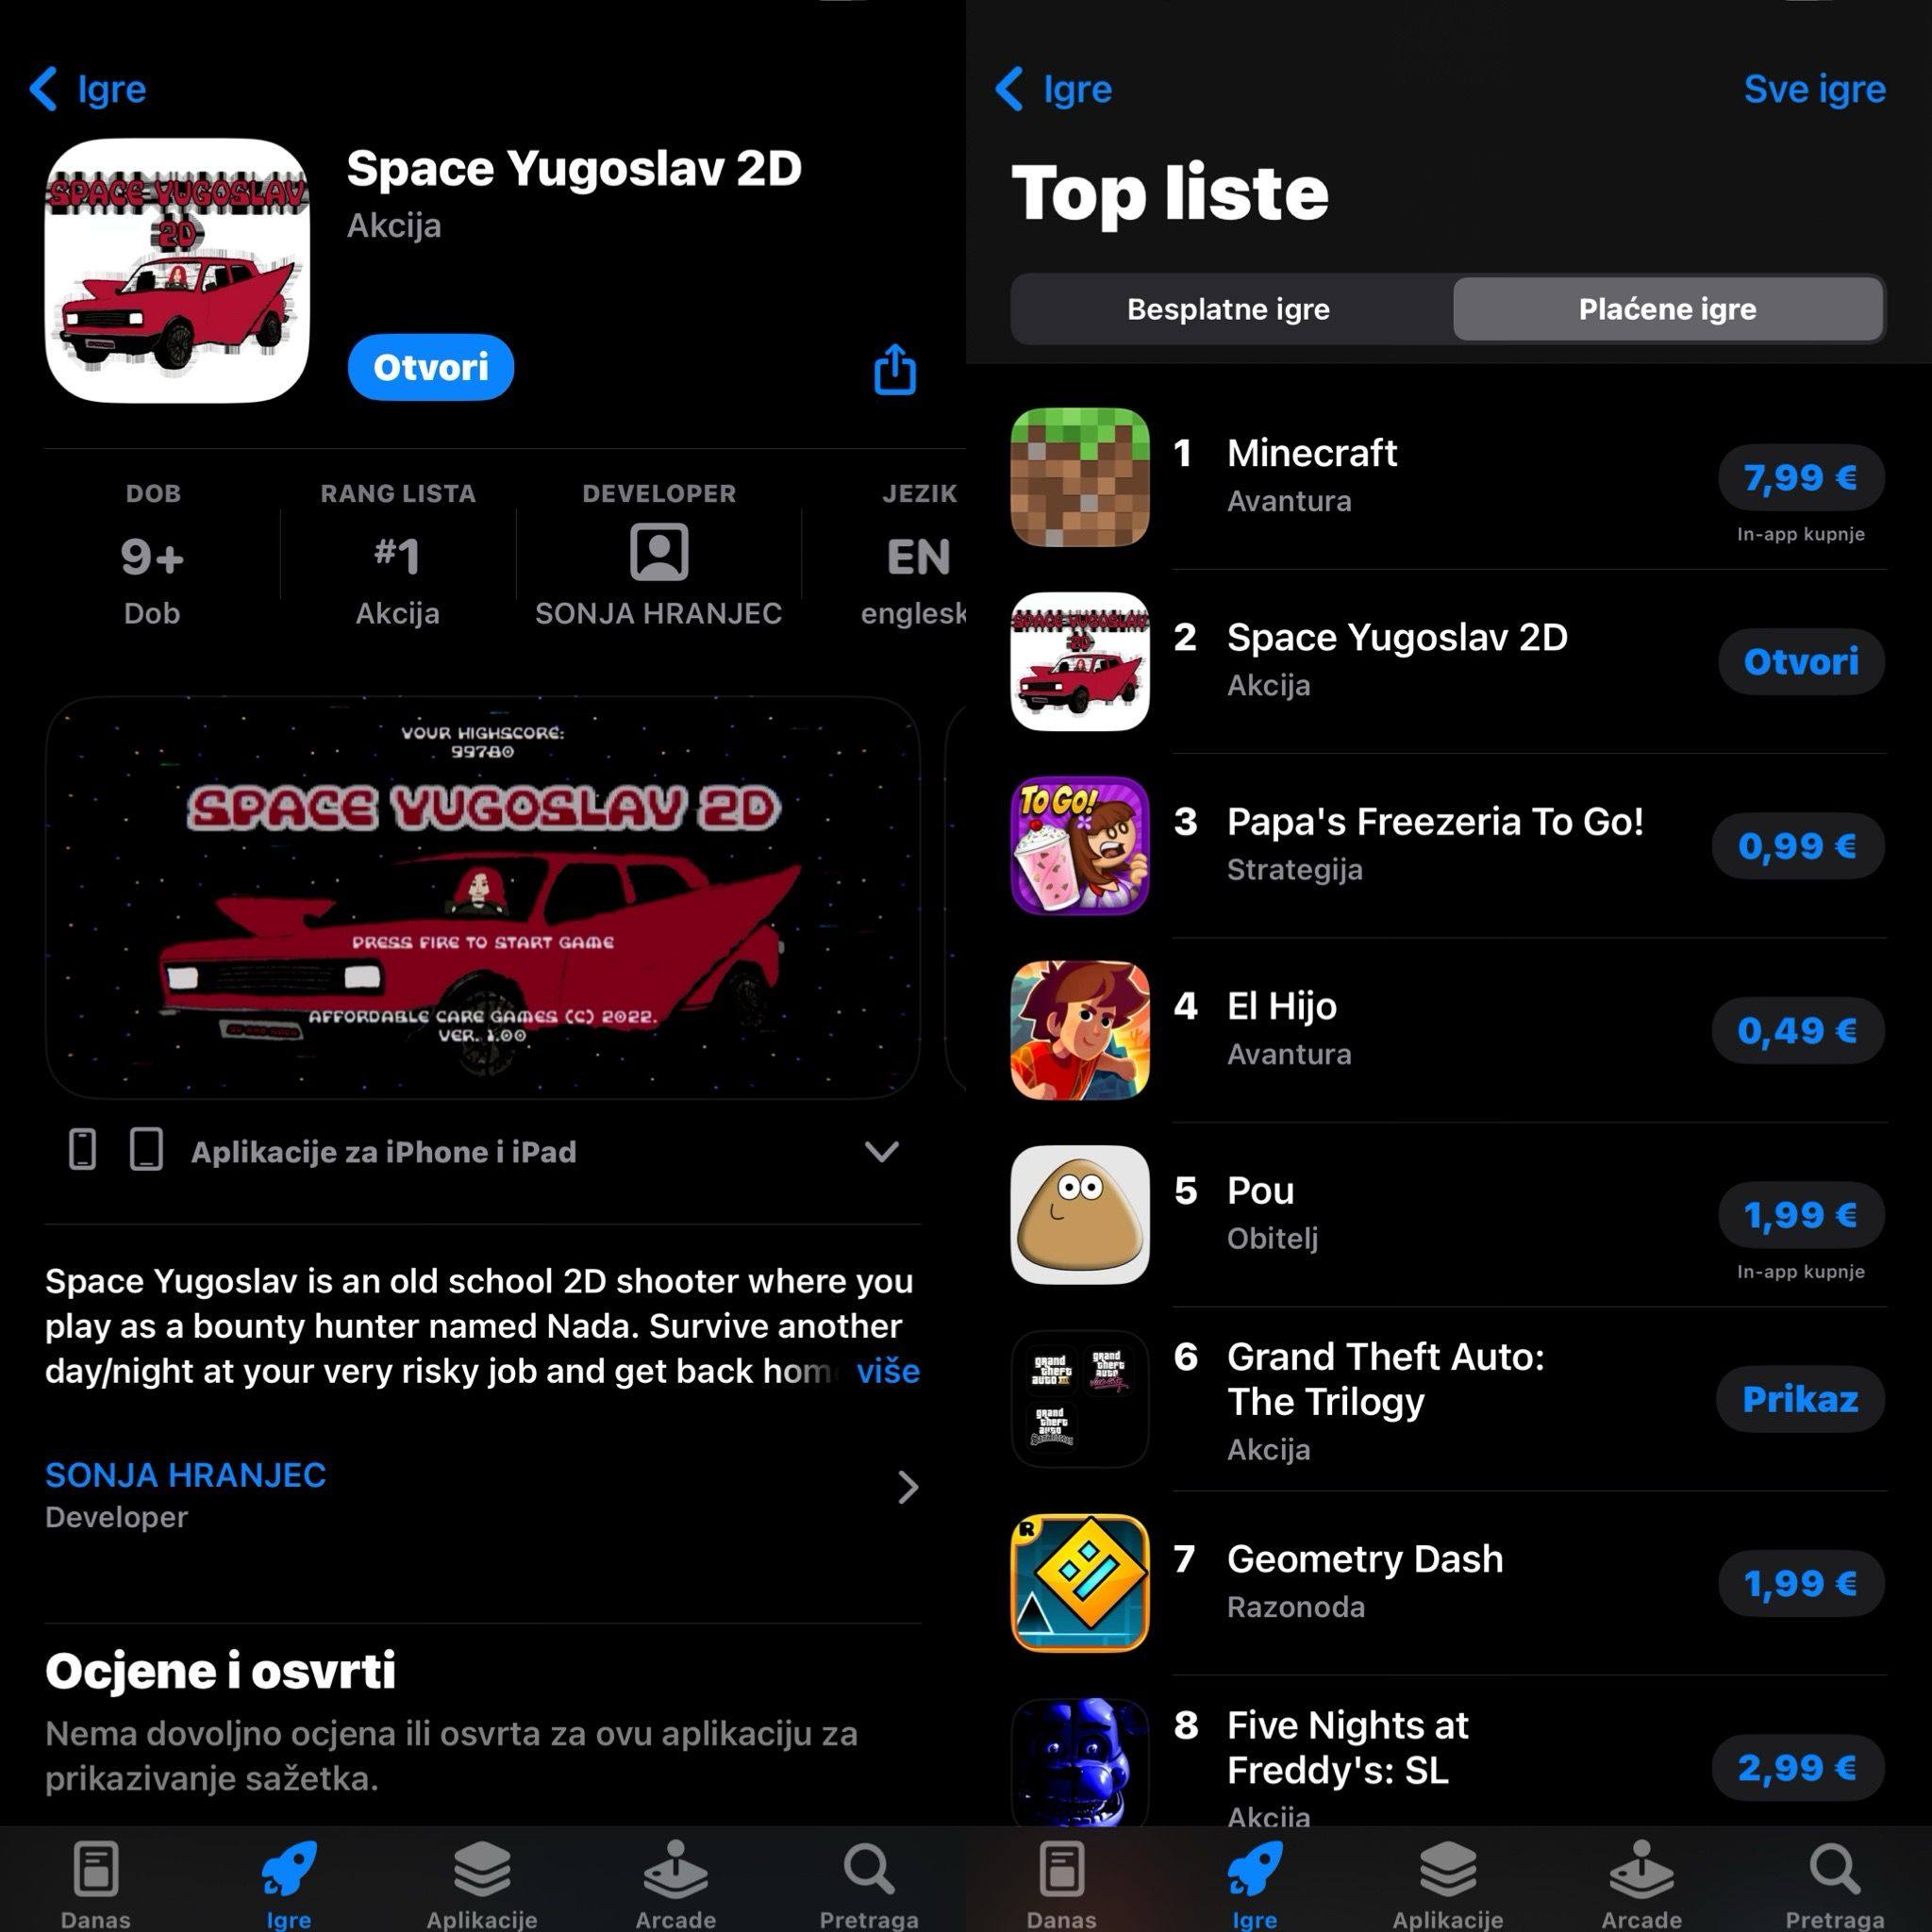 Space Yugoslav 2D on App Store